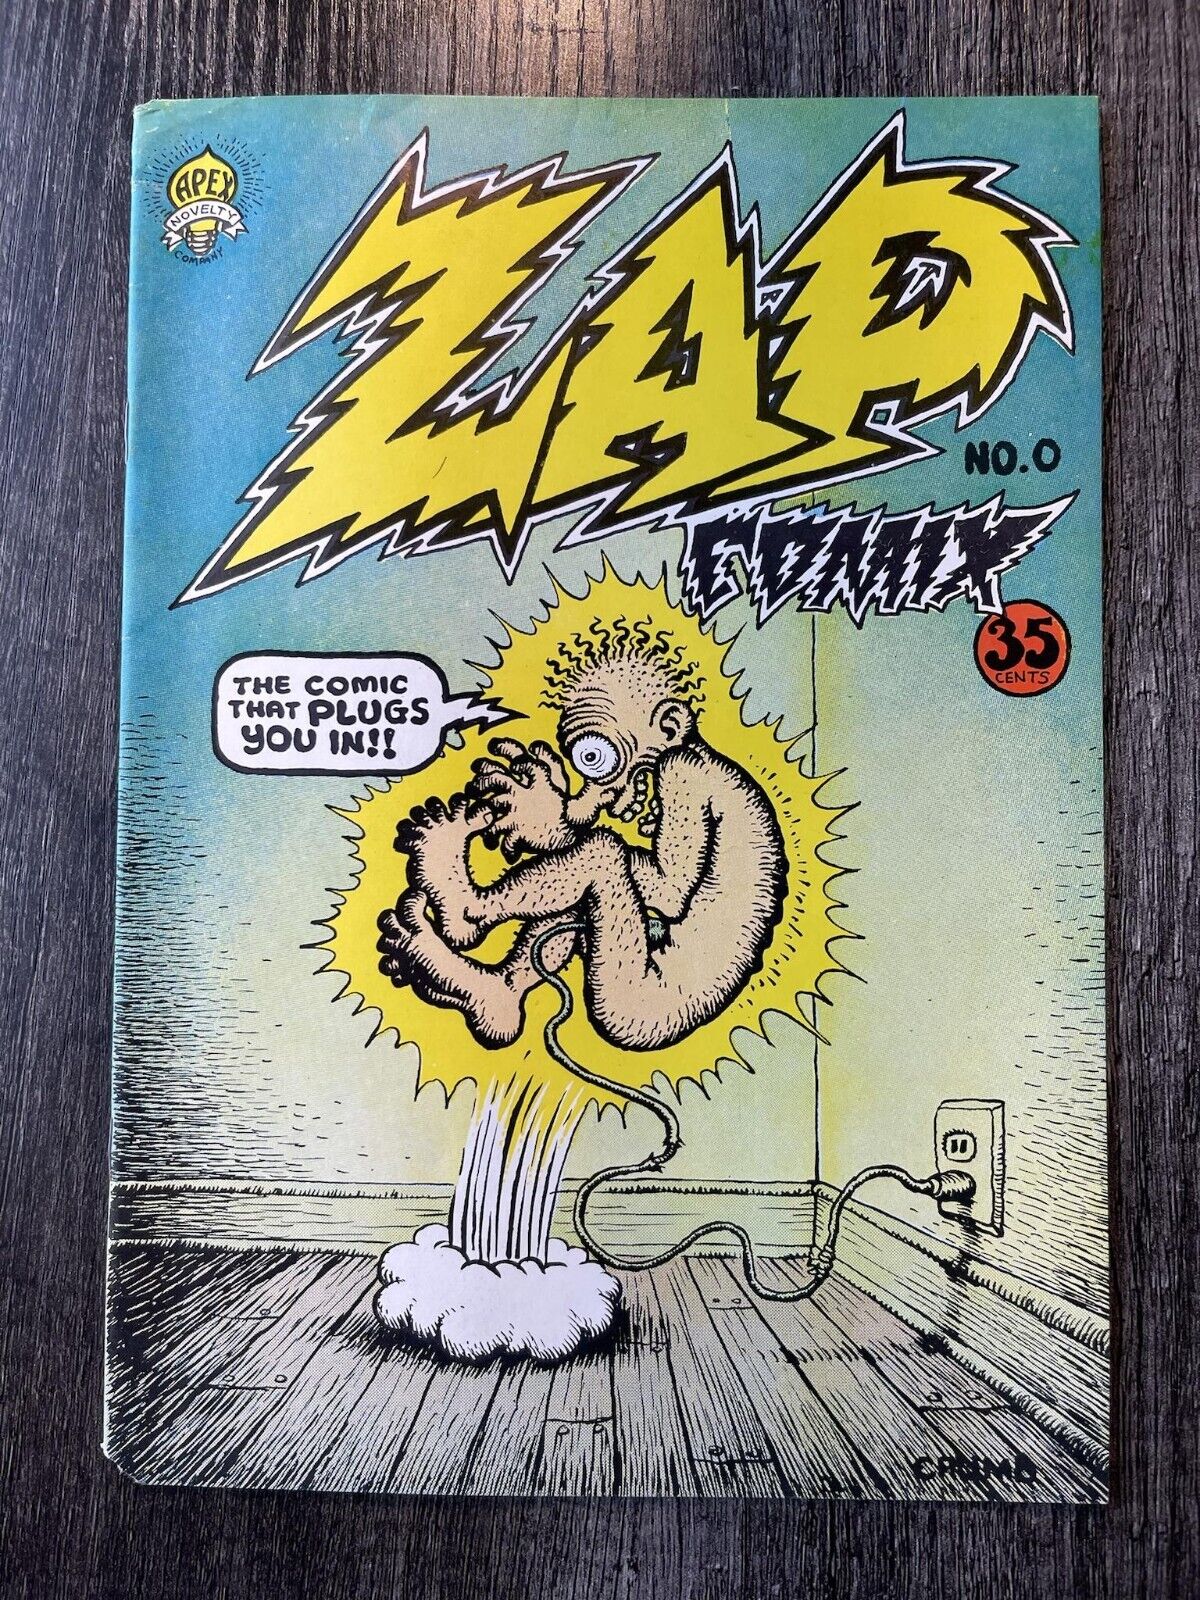 Zap Comix #0 (Apex Novelties 1967) R Crumb, HTF and very rare 1st Print FN-